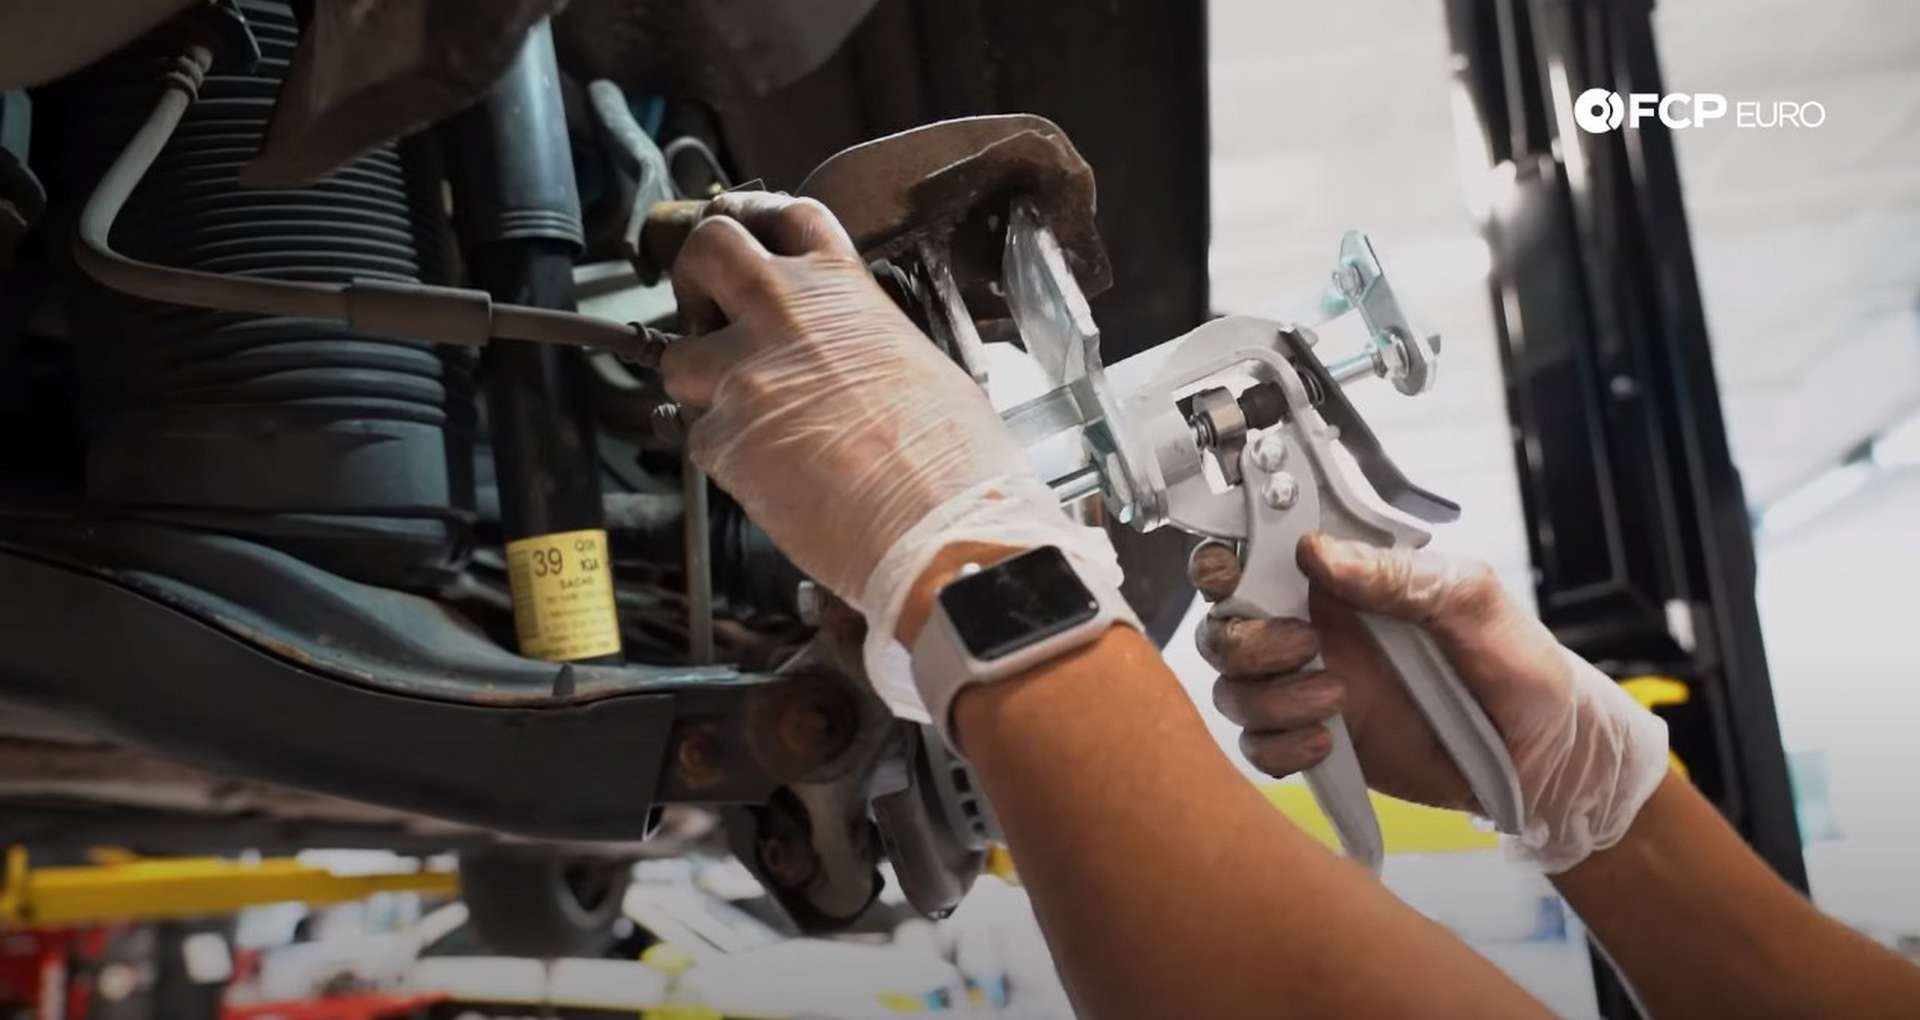 DIY Mercedes W211/212 Rear Brake Job resetting the piston into the caliper